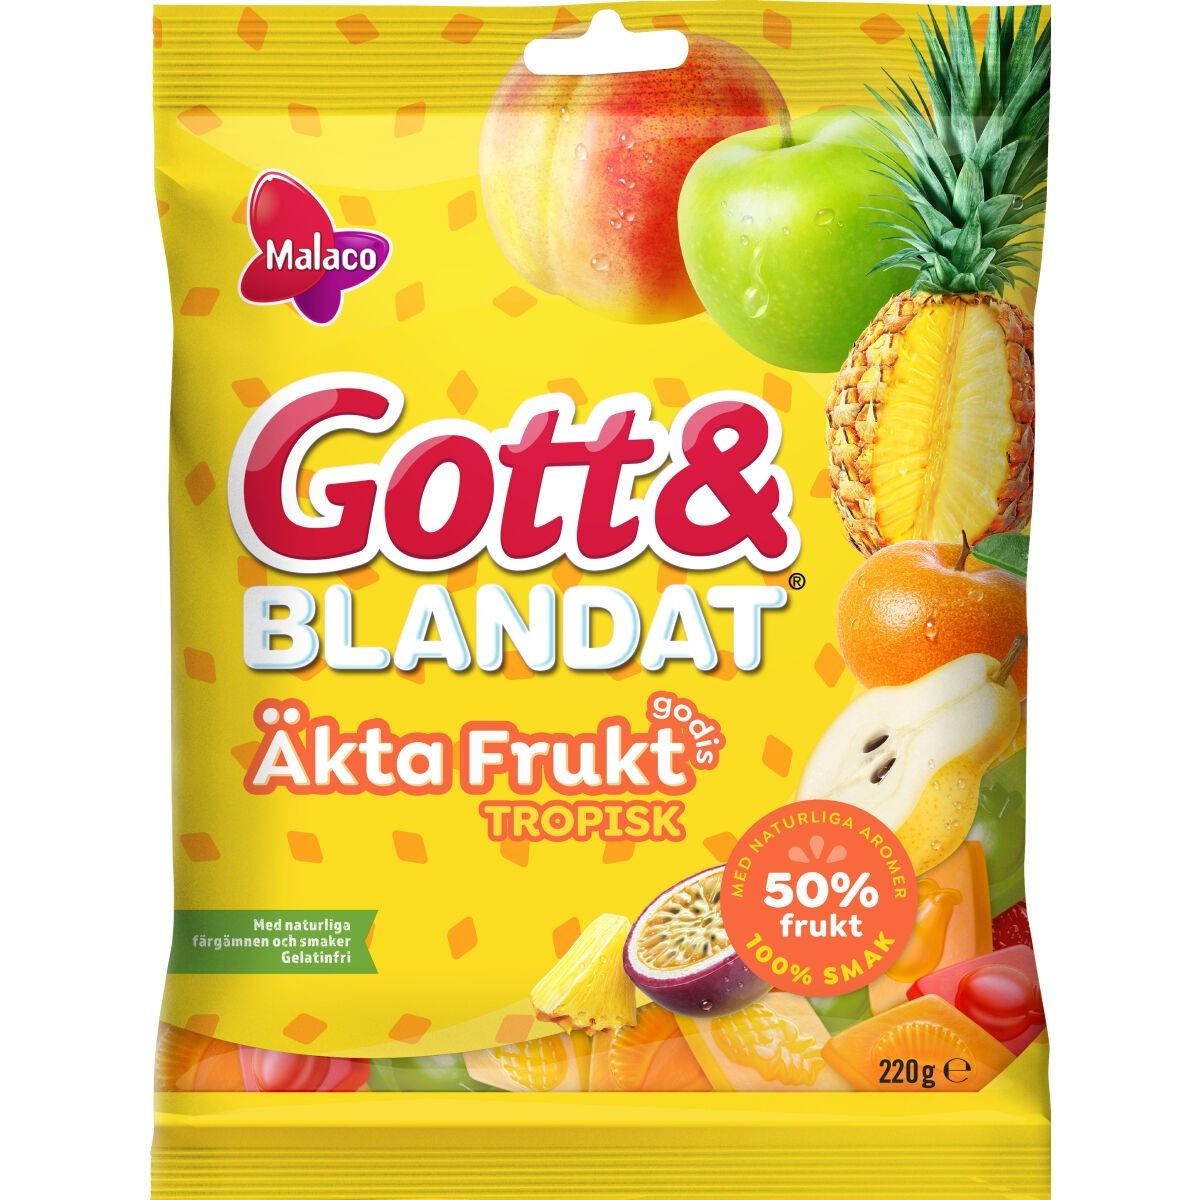 Good & mixed genuine fruit tropical - 220g - Ditt svenska skafferi